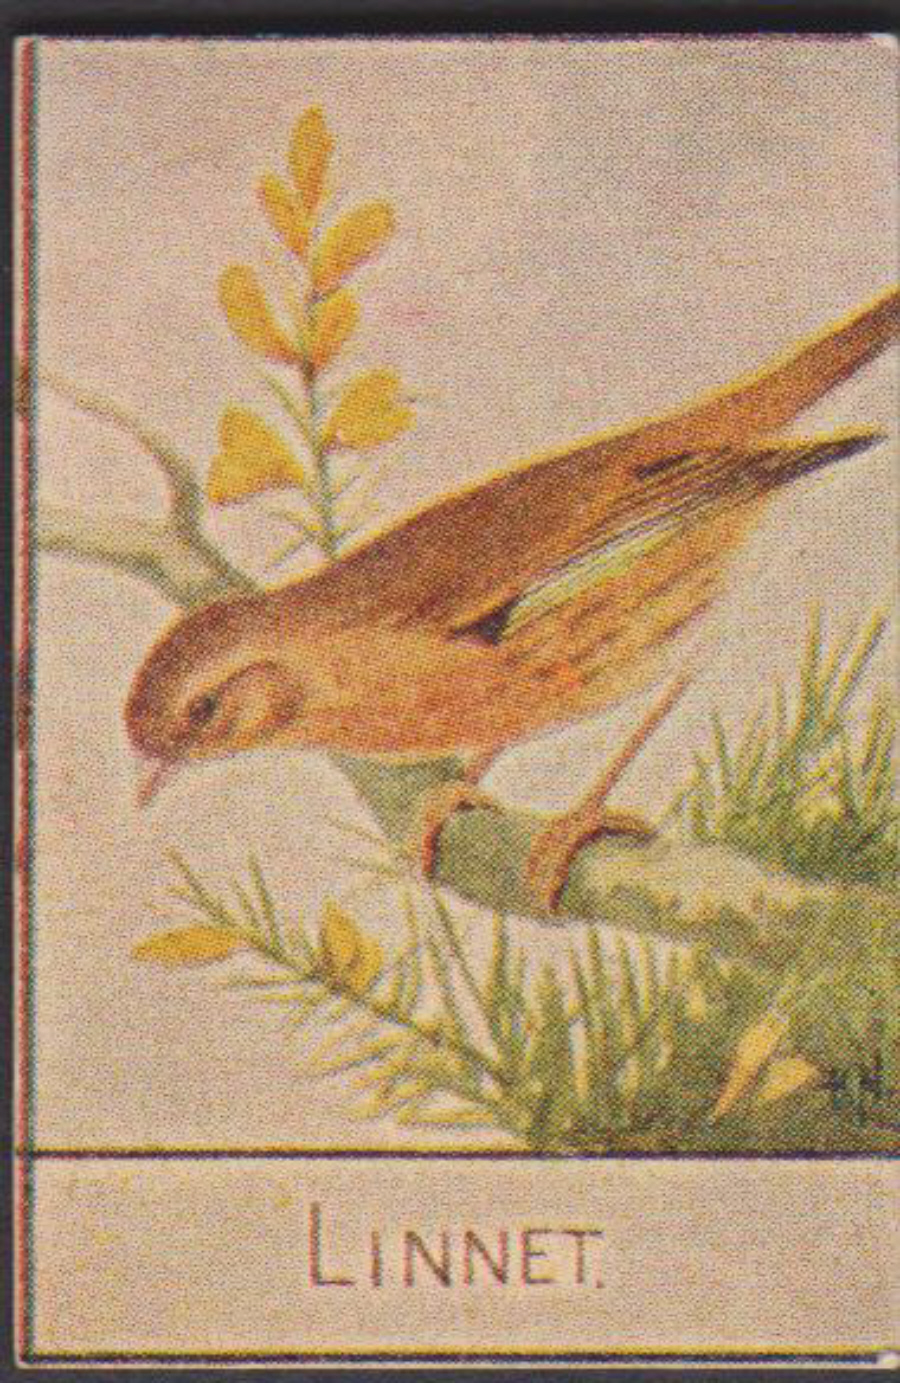 Spratt's British Bird Series Numbered No 52 Linnet